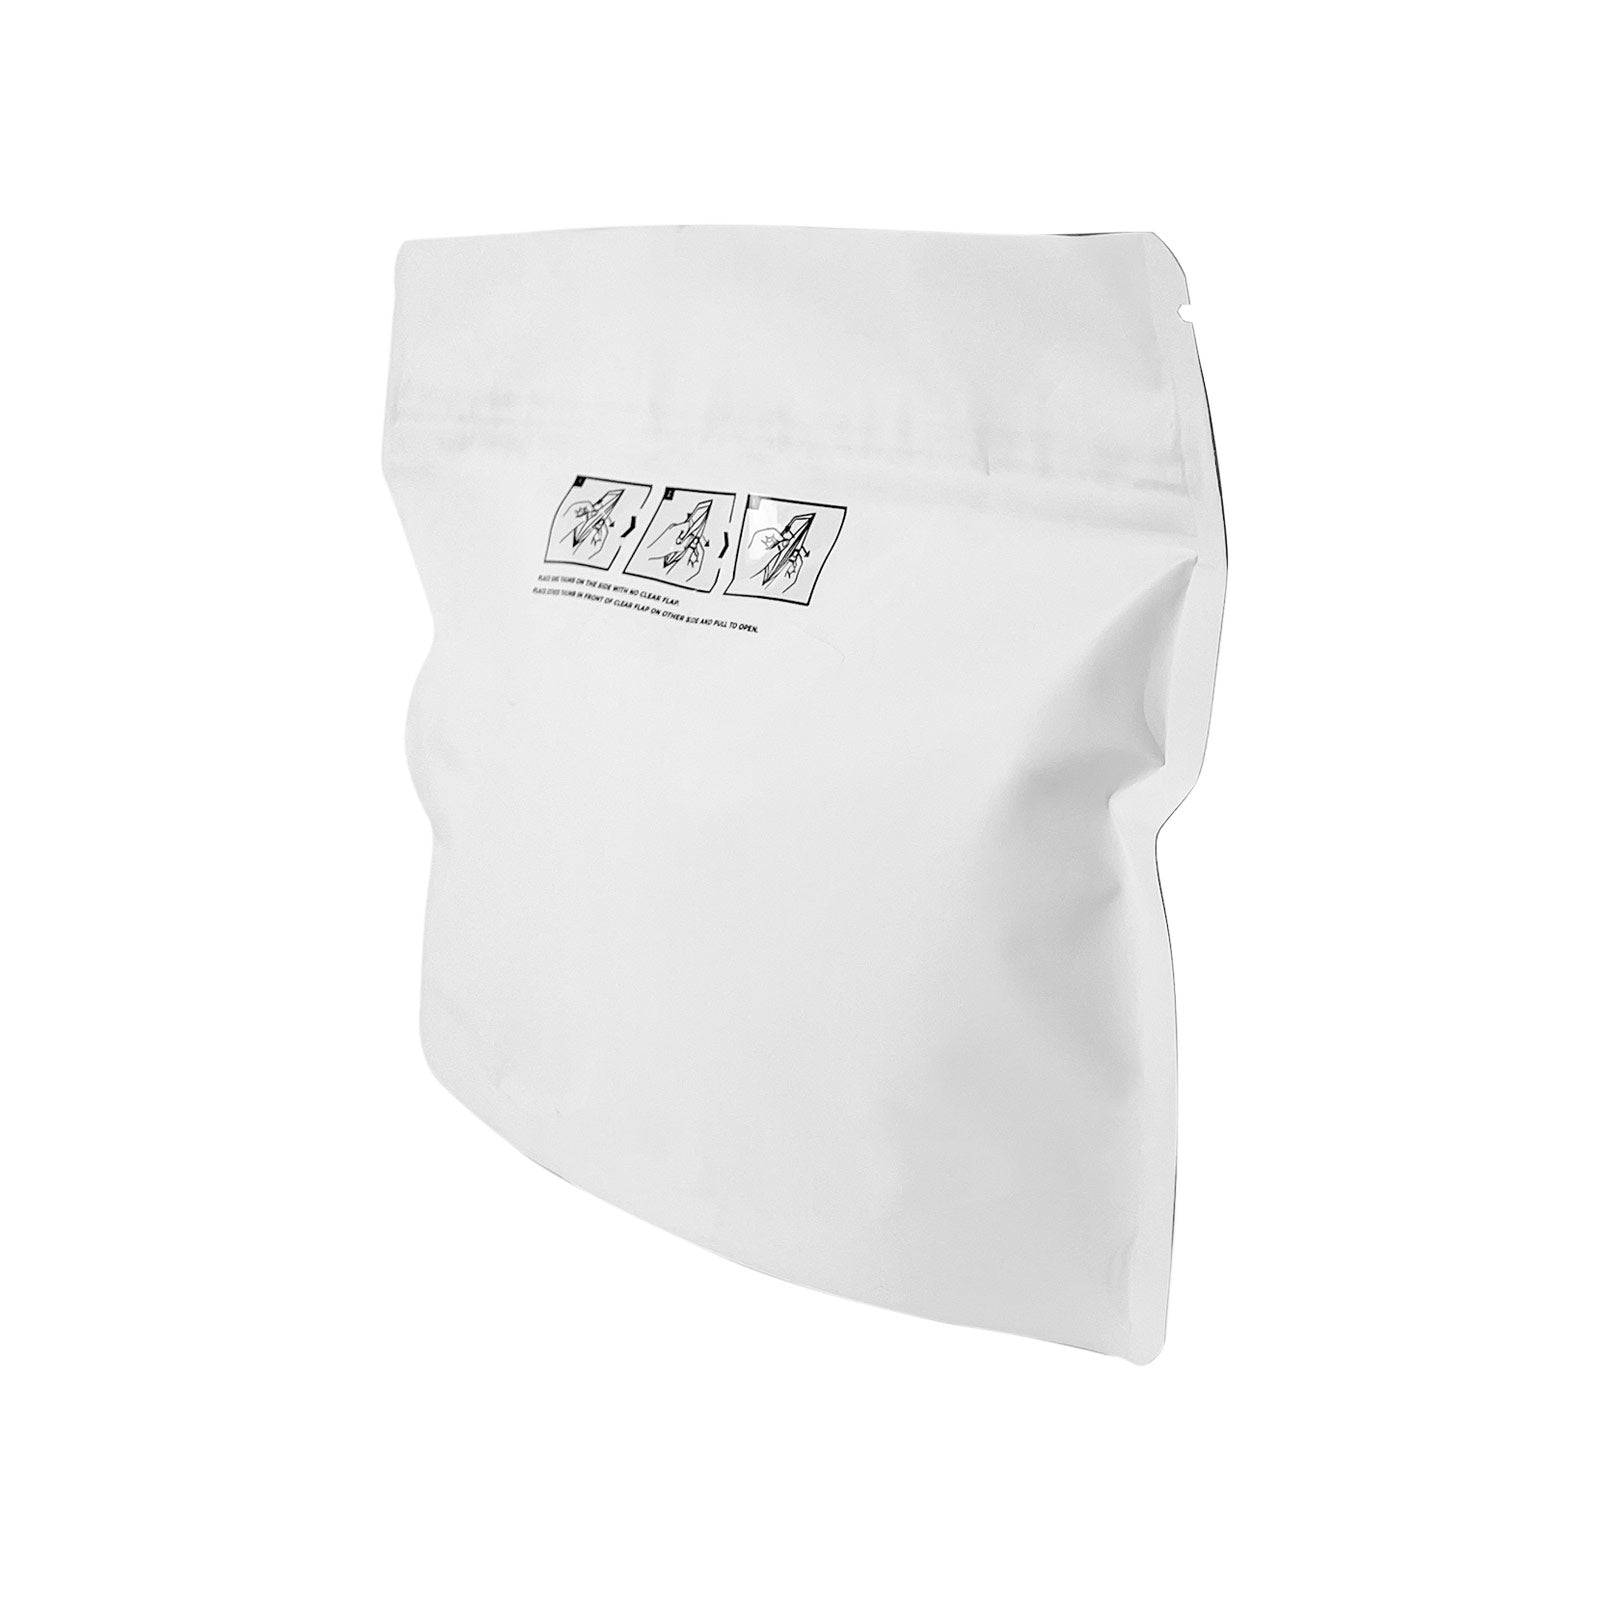 8"x6" Medium Child Resistant Exit Bags All White - 1,000 Count